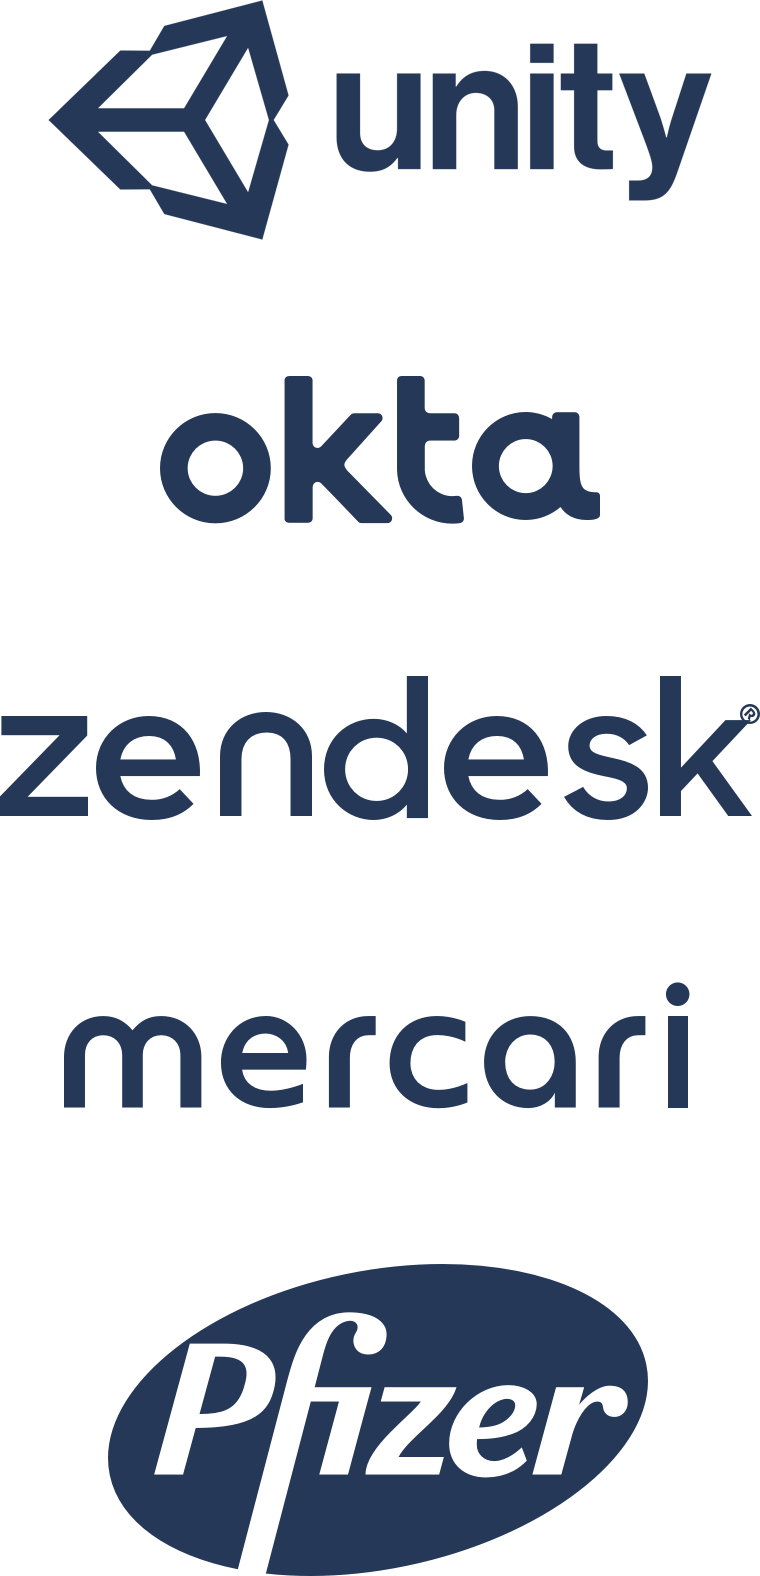 Logos Unity, Okta, Zendesk, Mercari et Pfizer